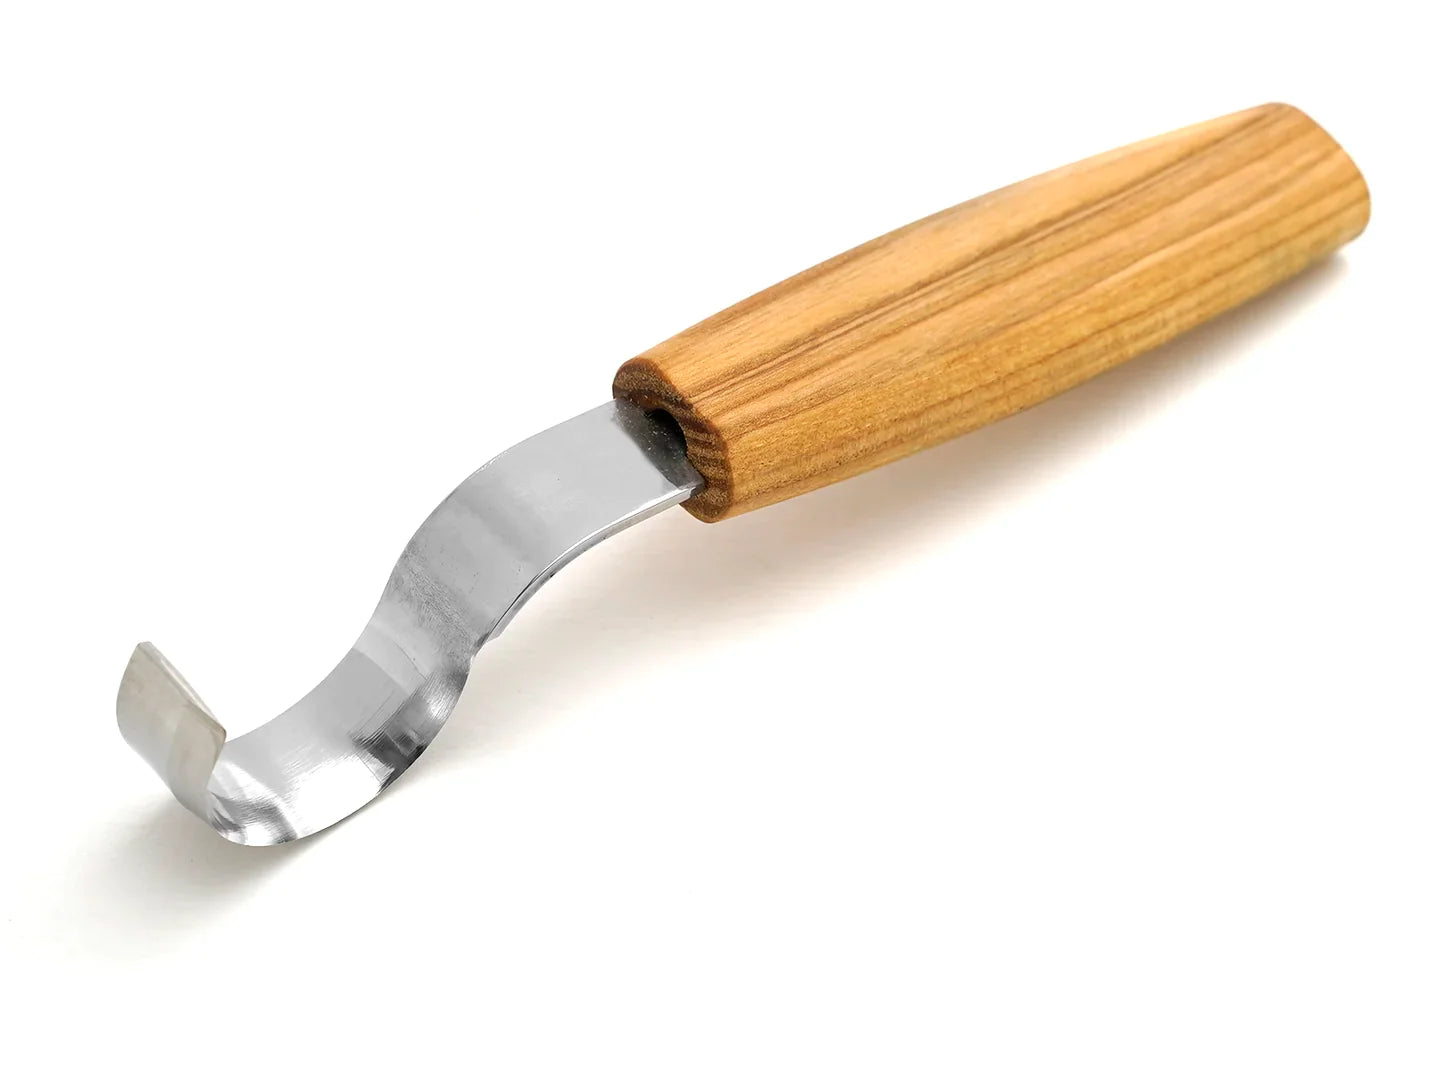 BeaverCraft SK2 - Spoon Carving Knife 30mm